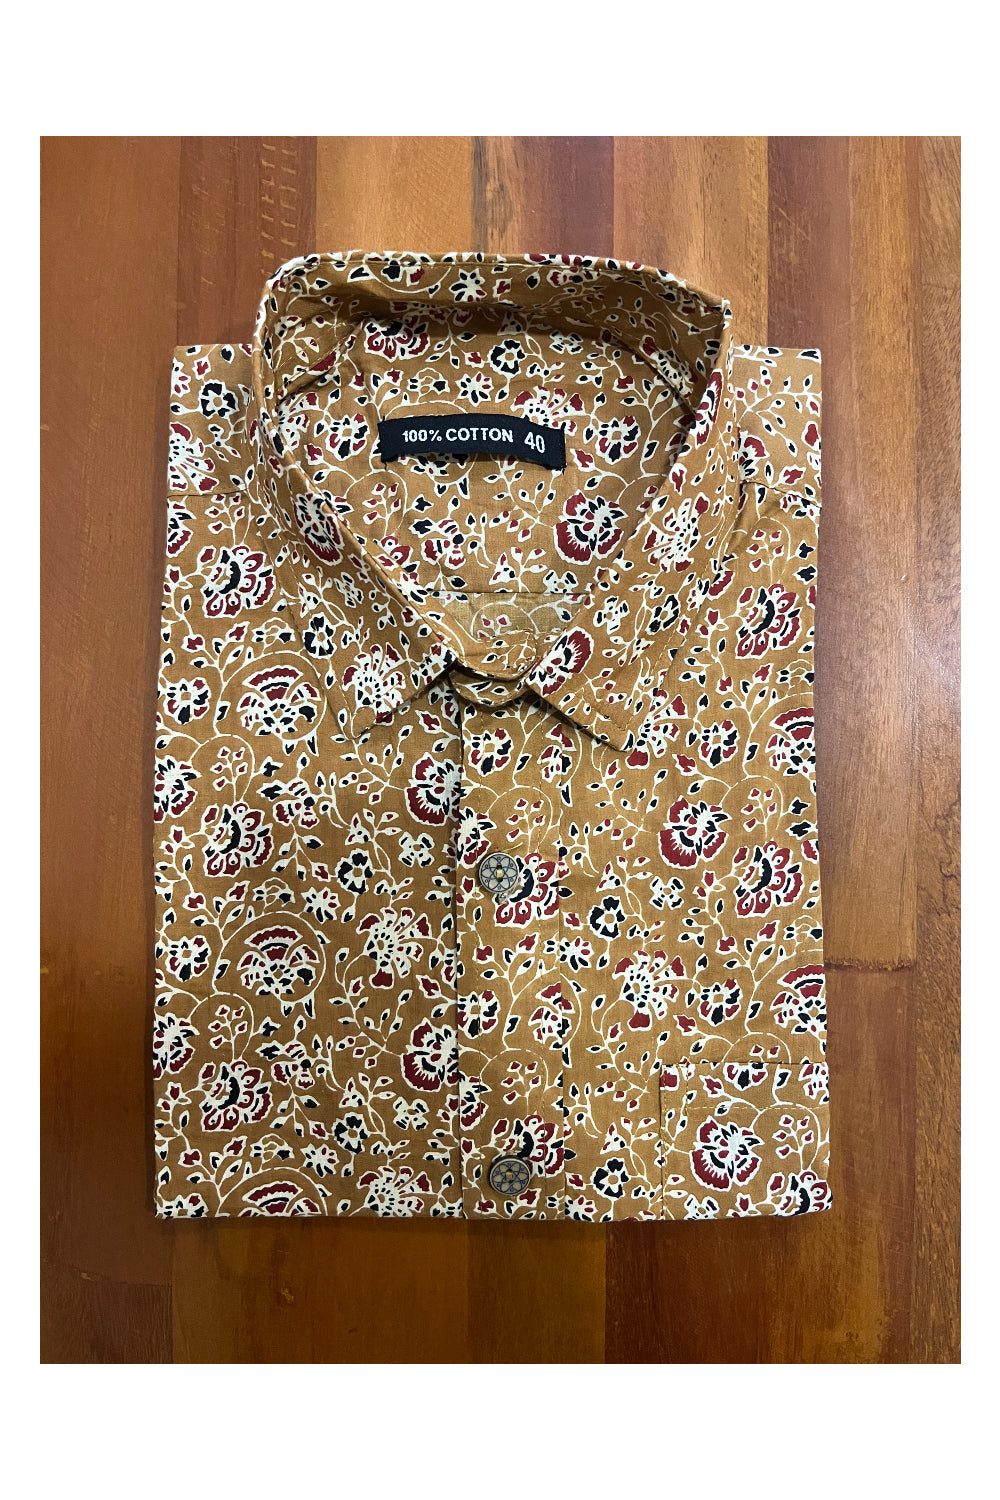 Jaipur Printed Shirts by Southloom.com